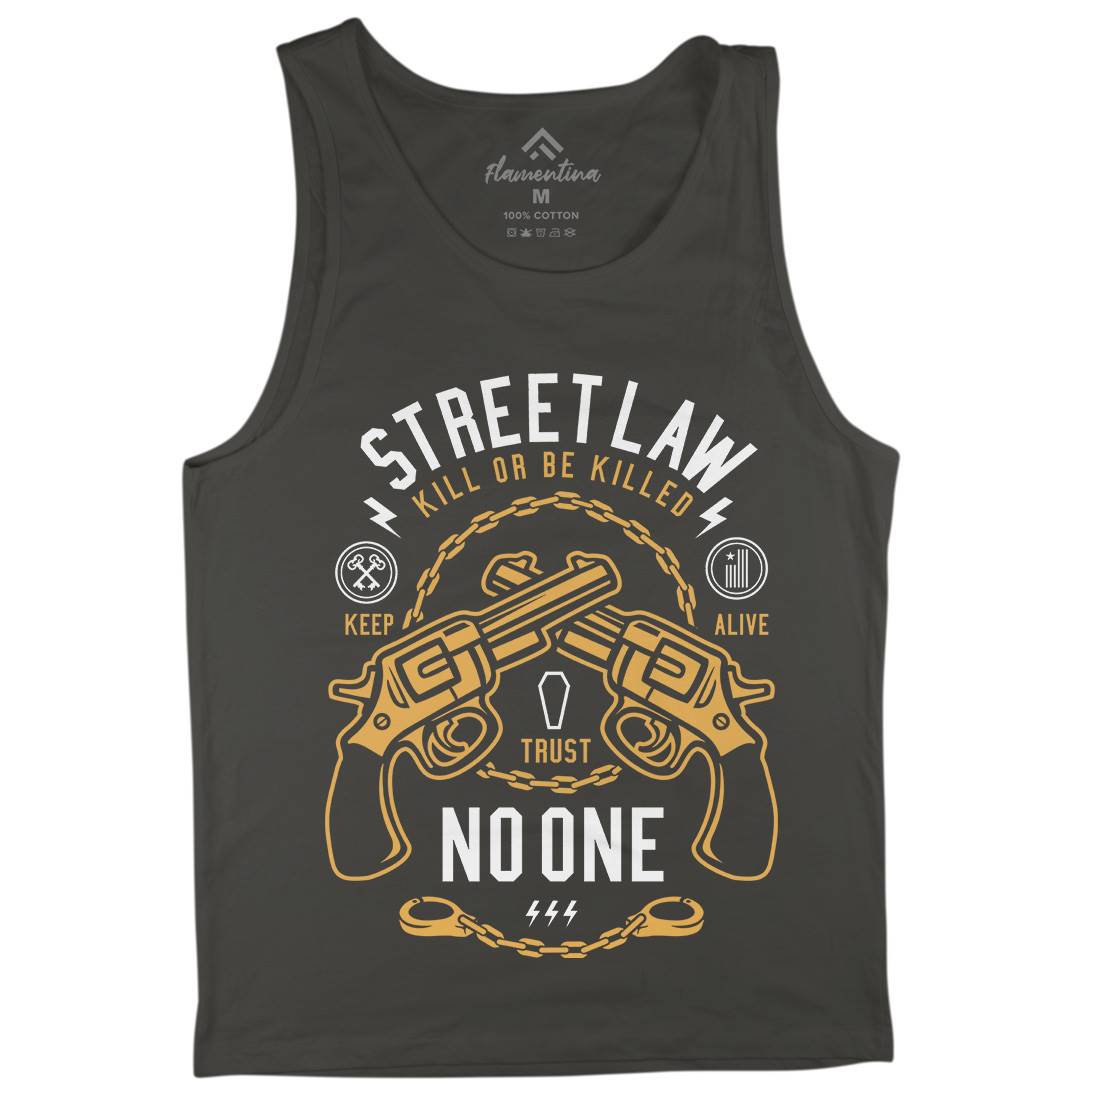 Street Law Mens Tank Top Vest Quotes A286